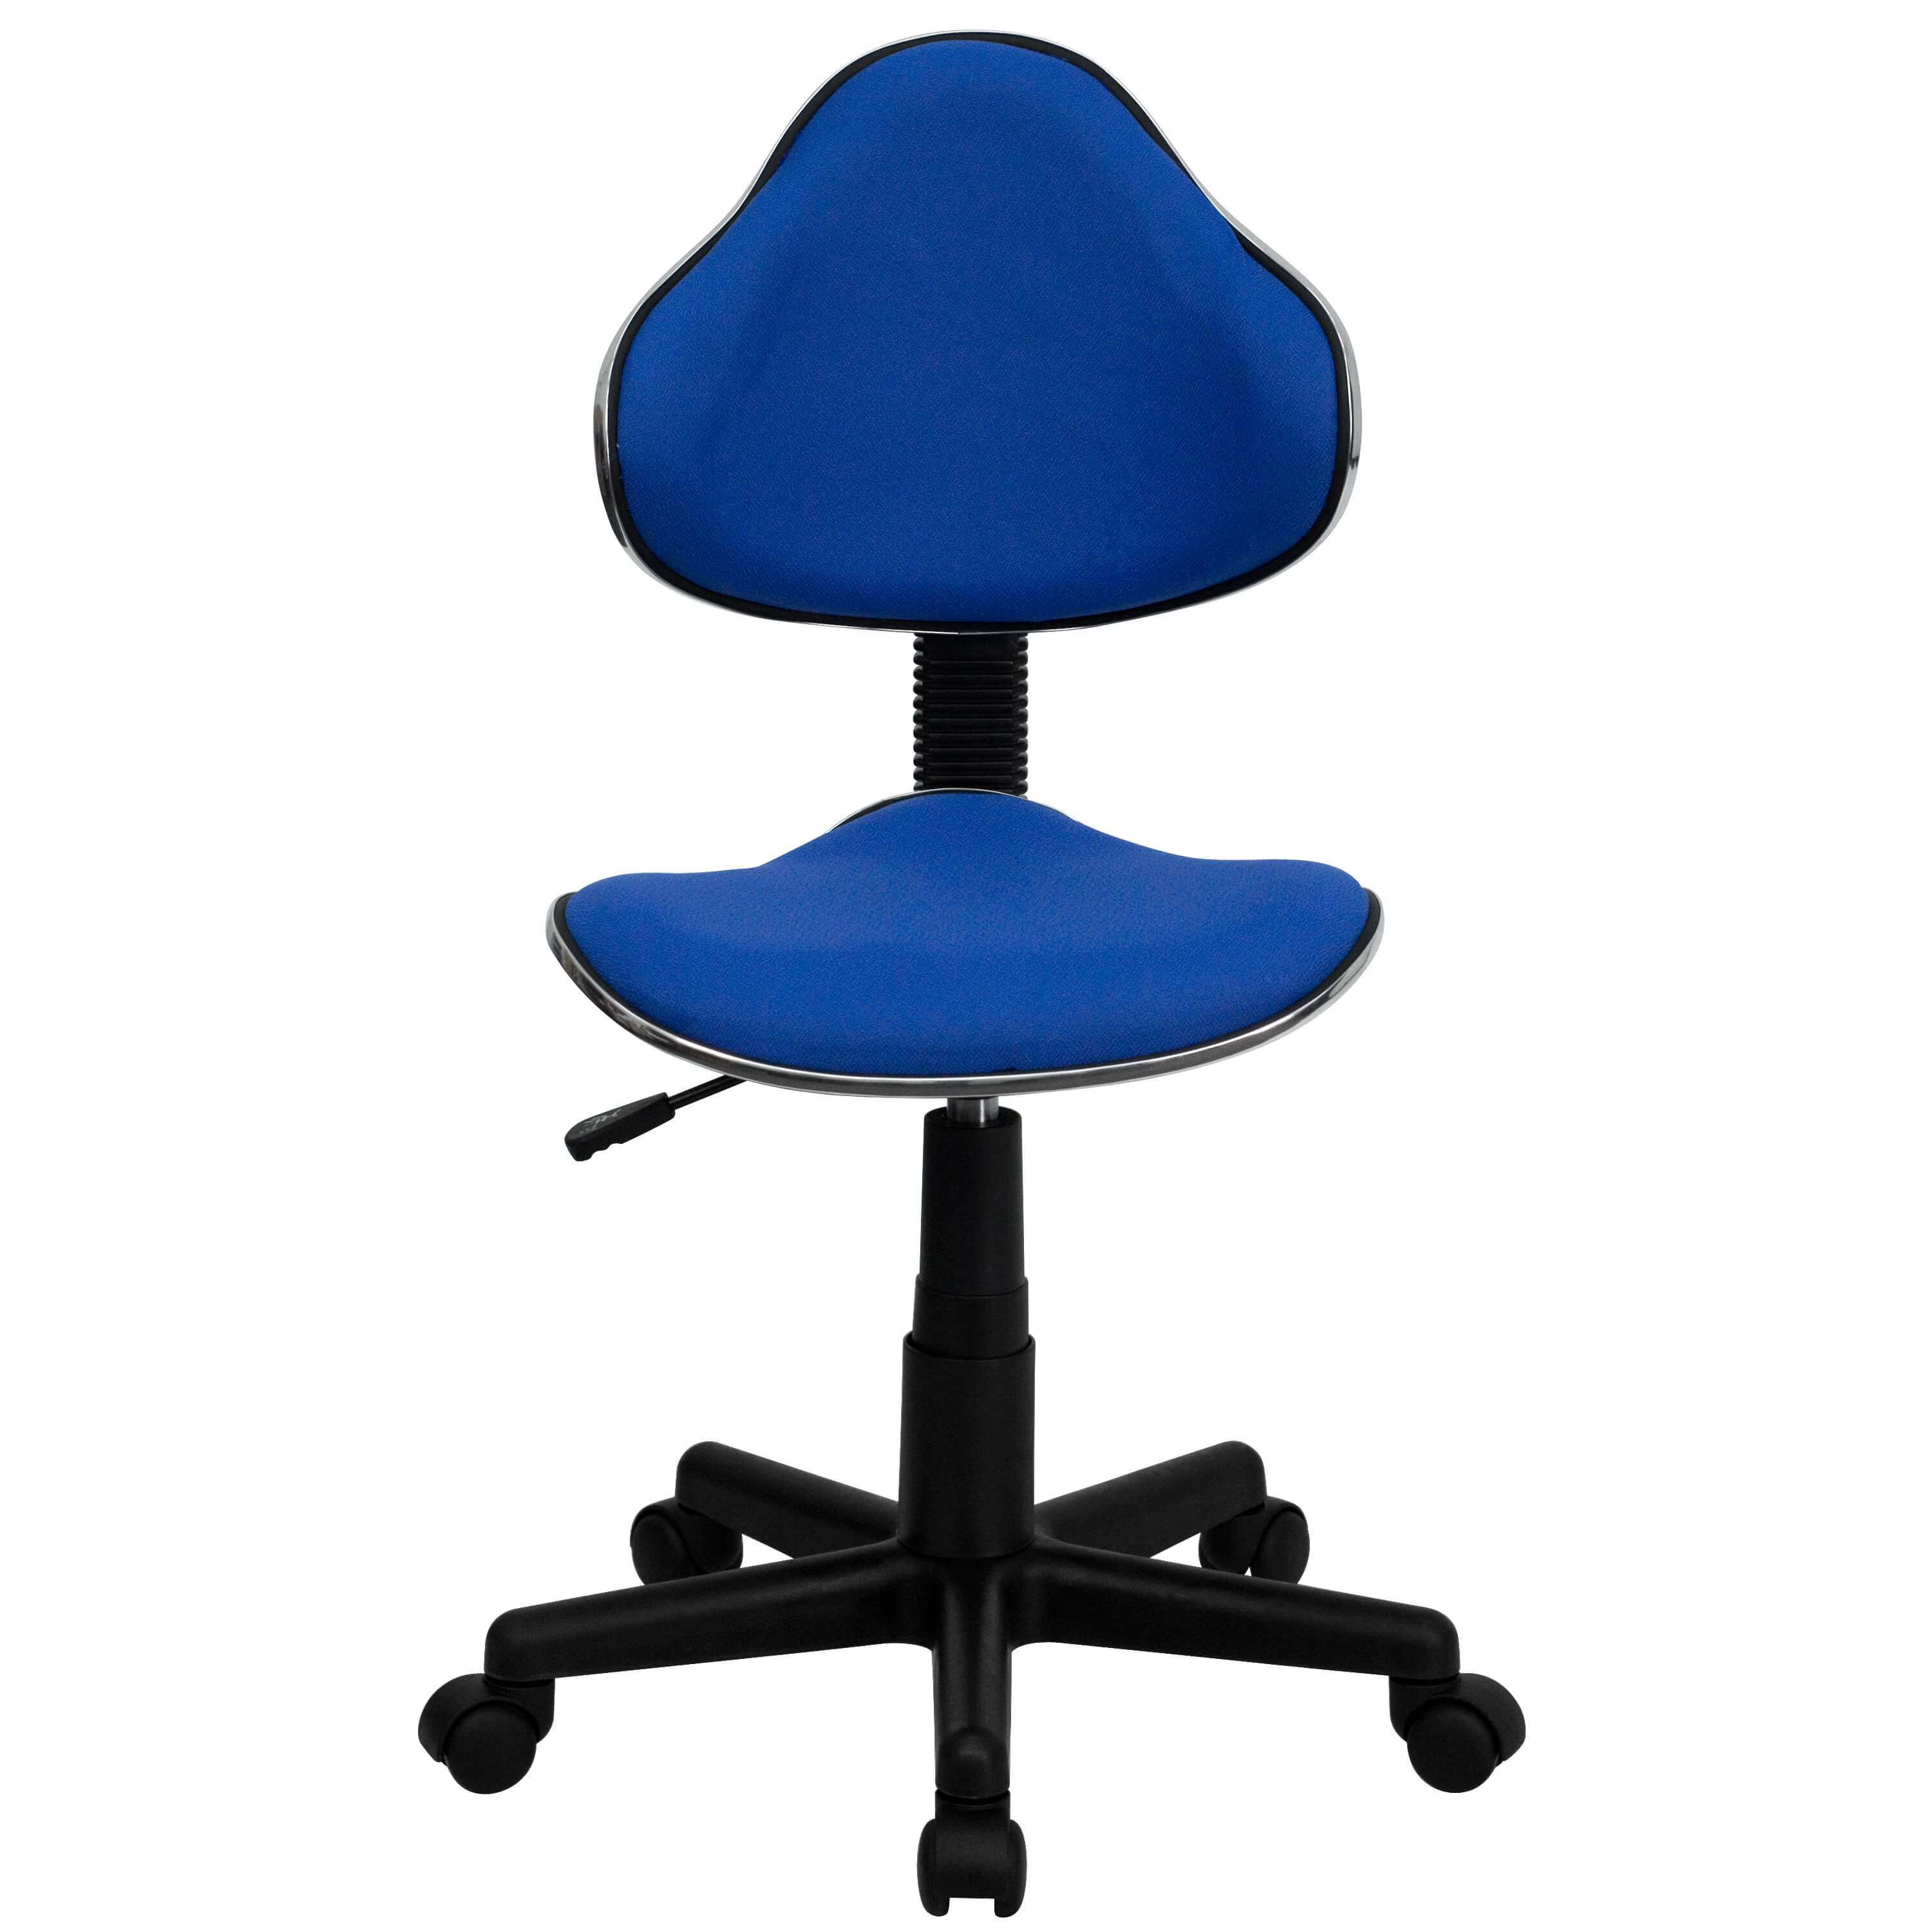 Colorful desk chairs CUB BT 699 BLUE GG FLA